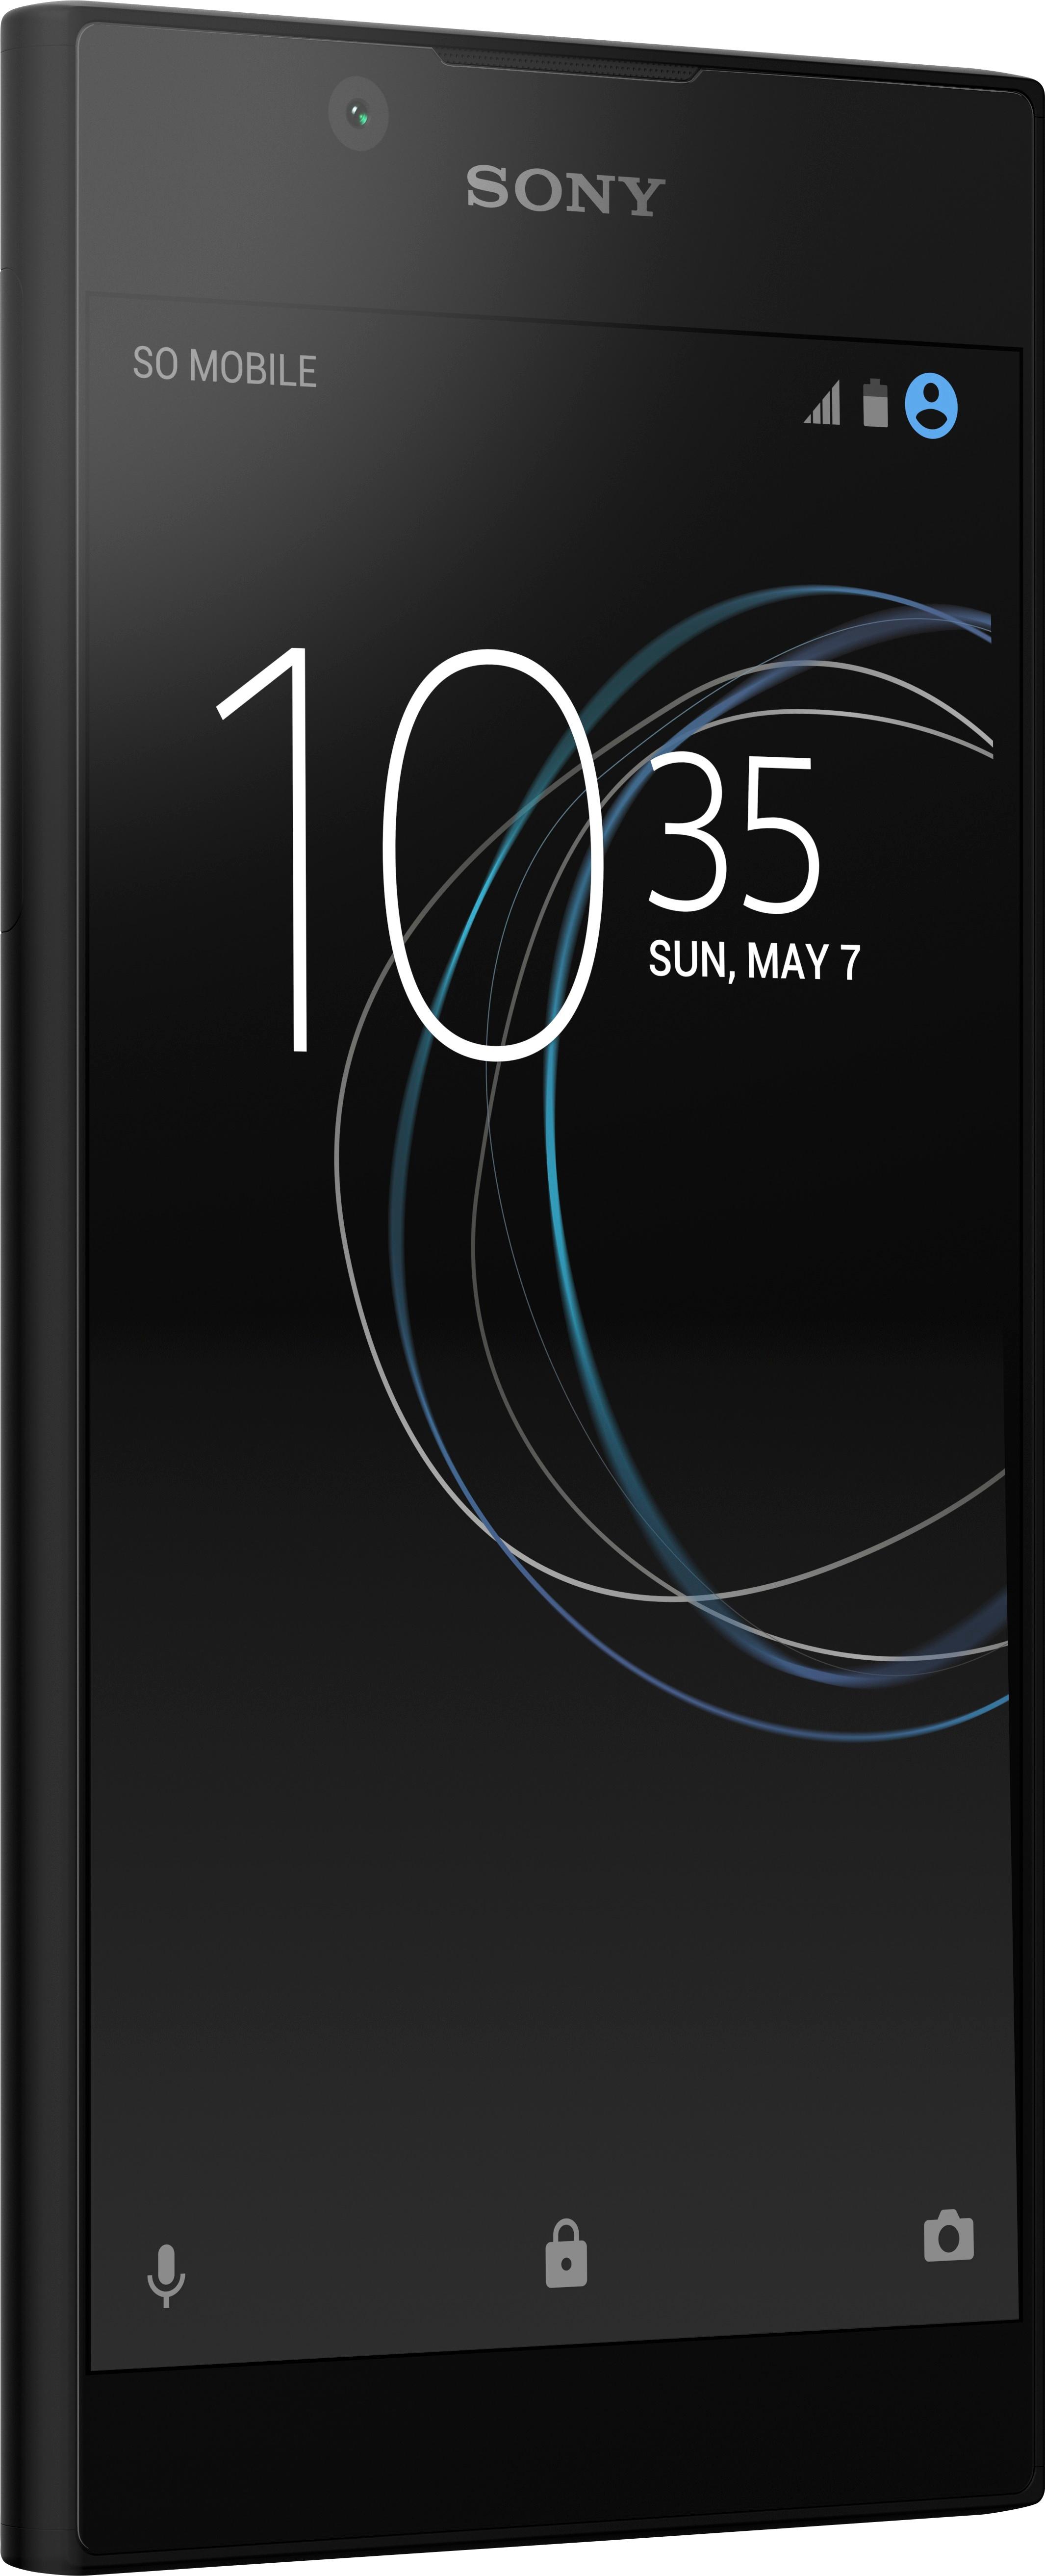 aftrekken Salie Hiel Best Buy: Sony XPERIA L1 4G LTE with 16GB Memory Cell Phone (Unlocked)  Black G3313